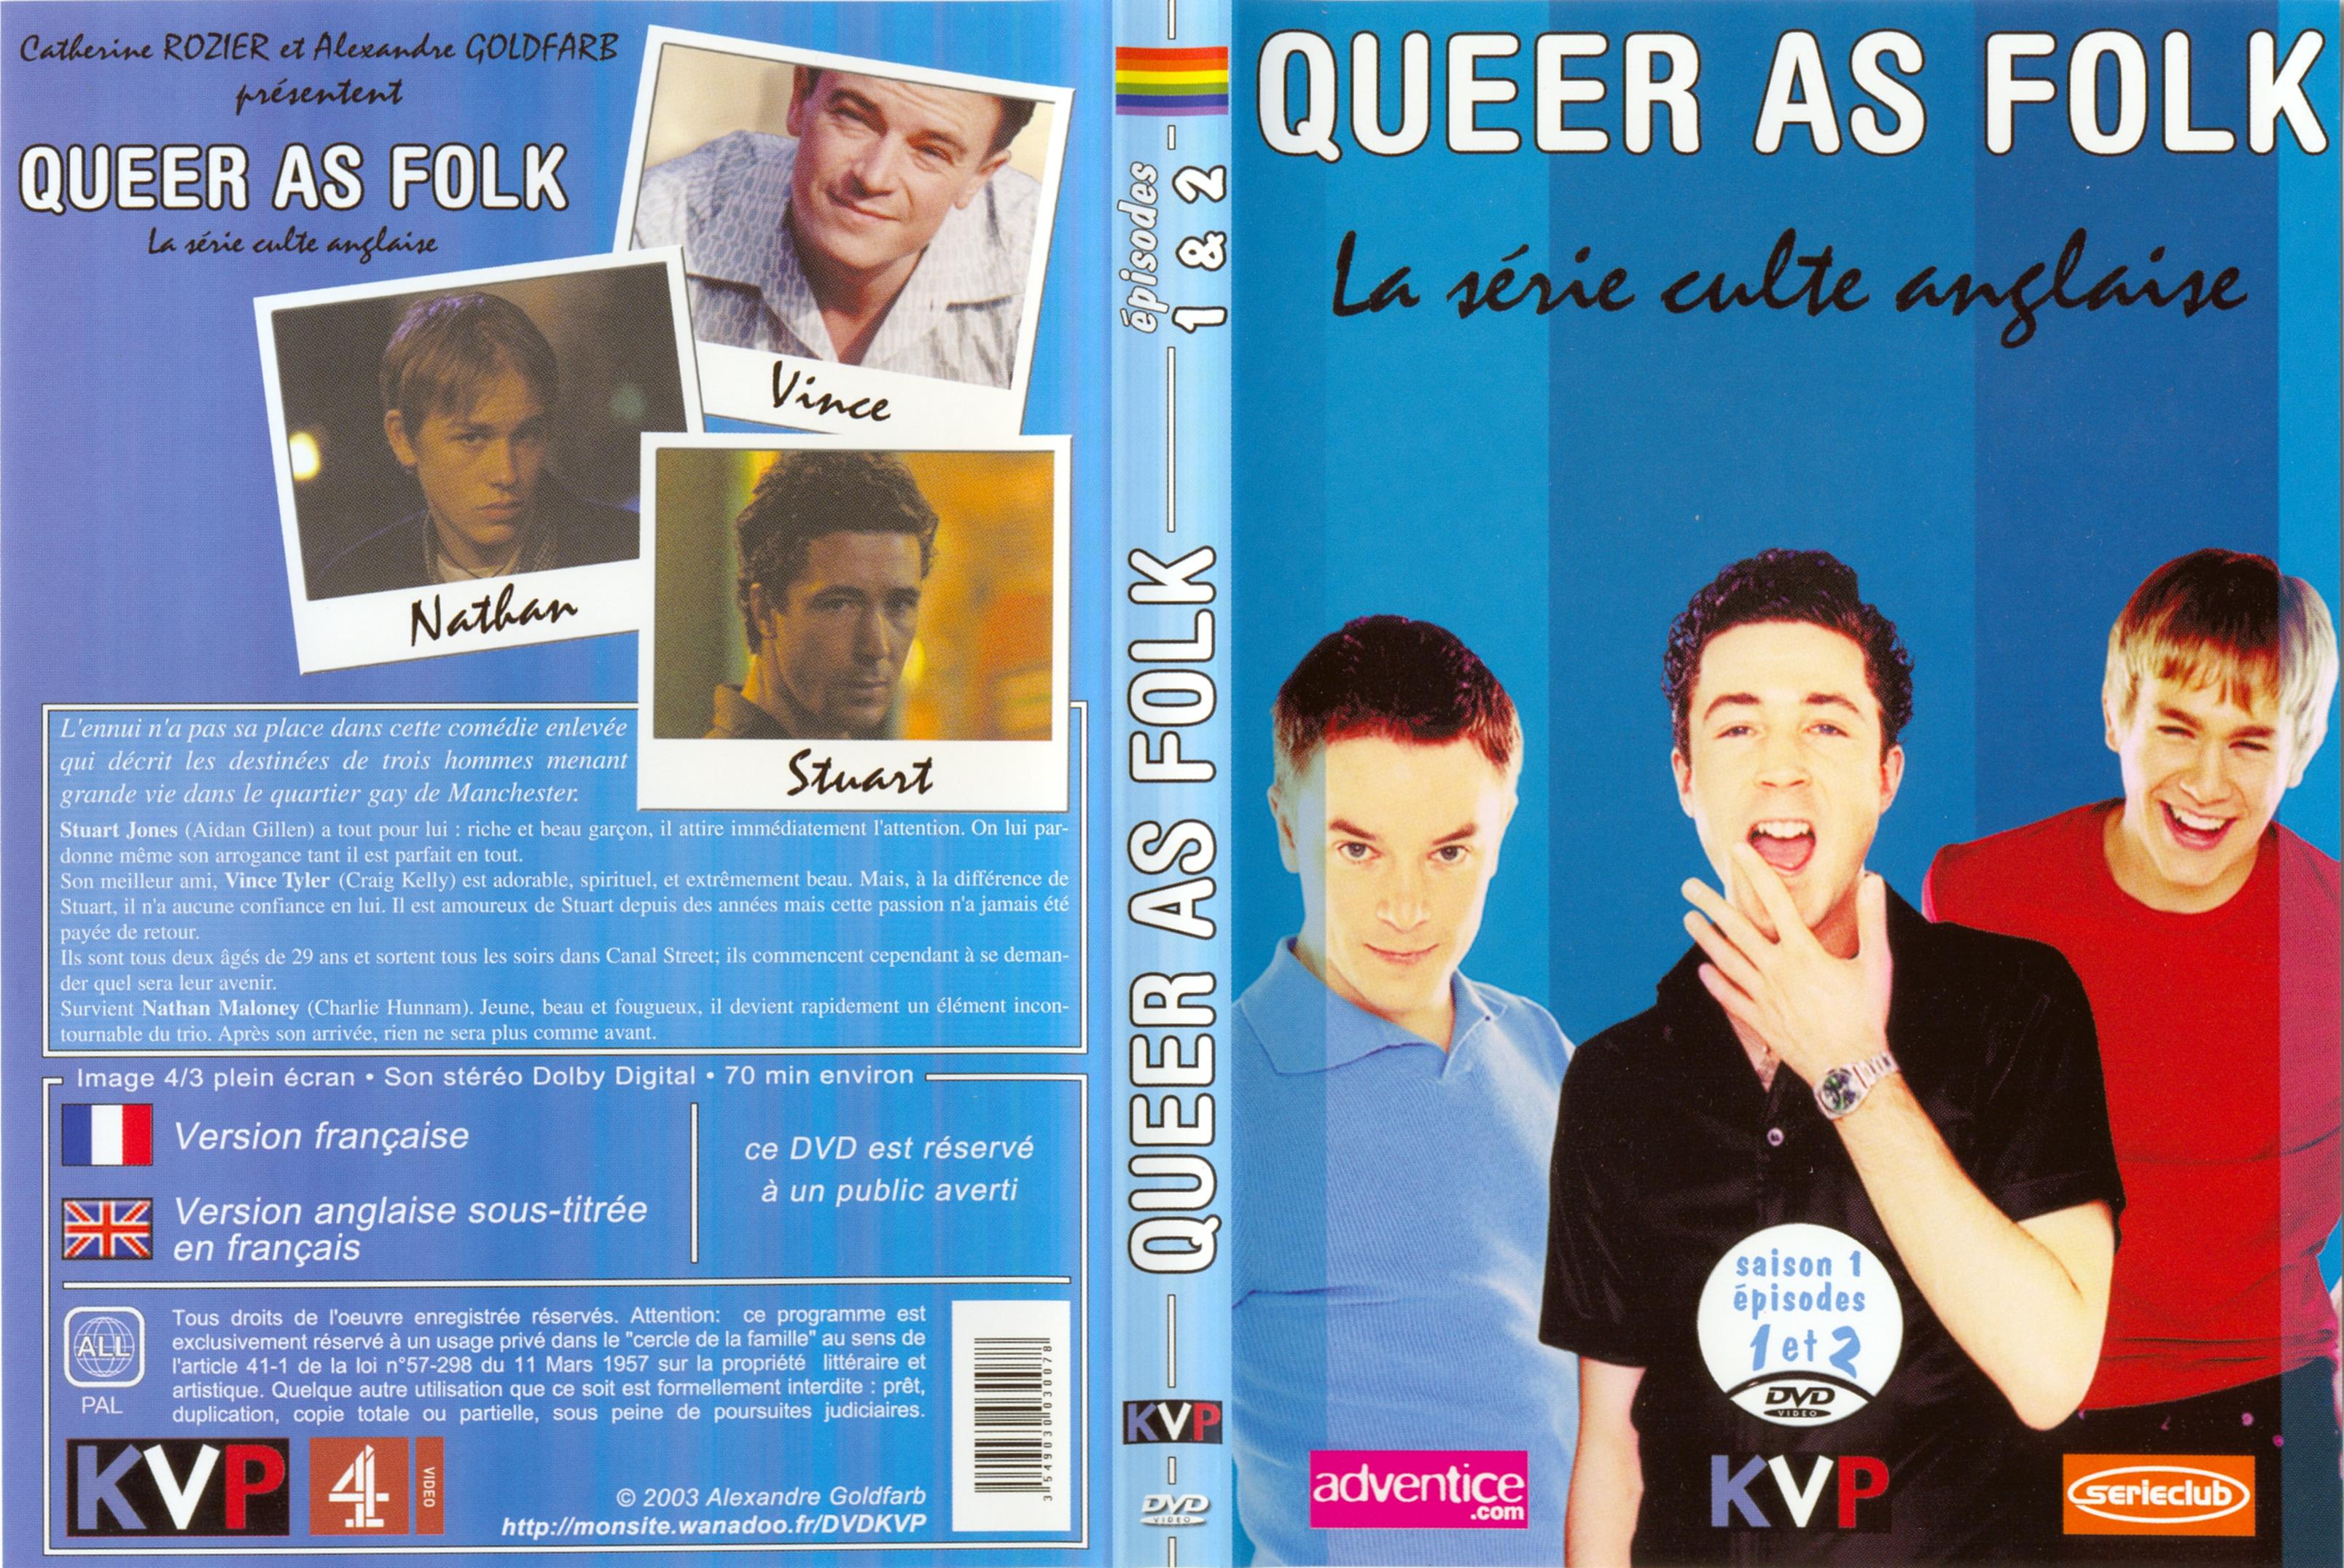 Jaquette DVD Queer as Folk - Episode 1 et 2